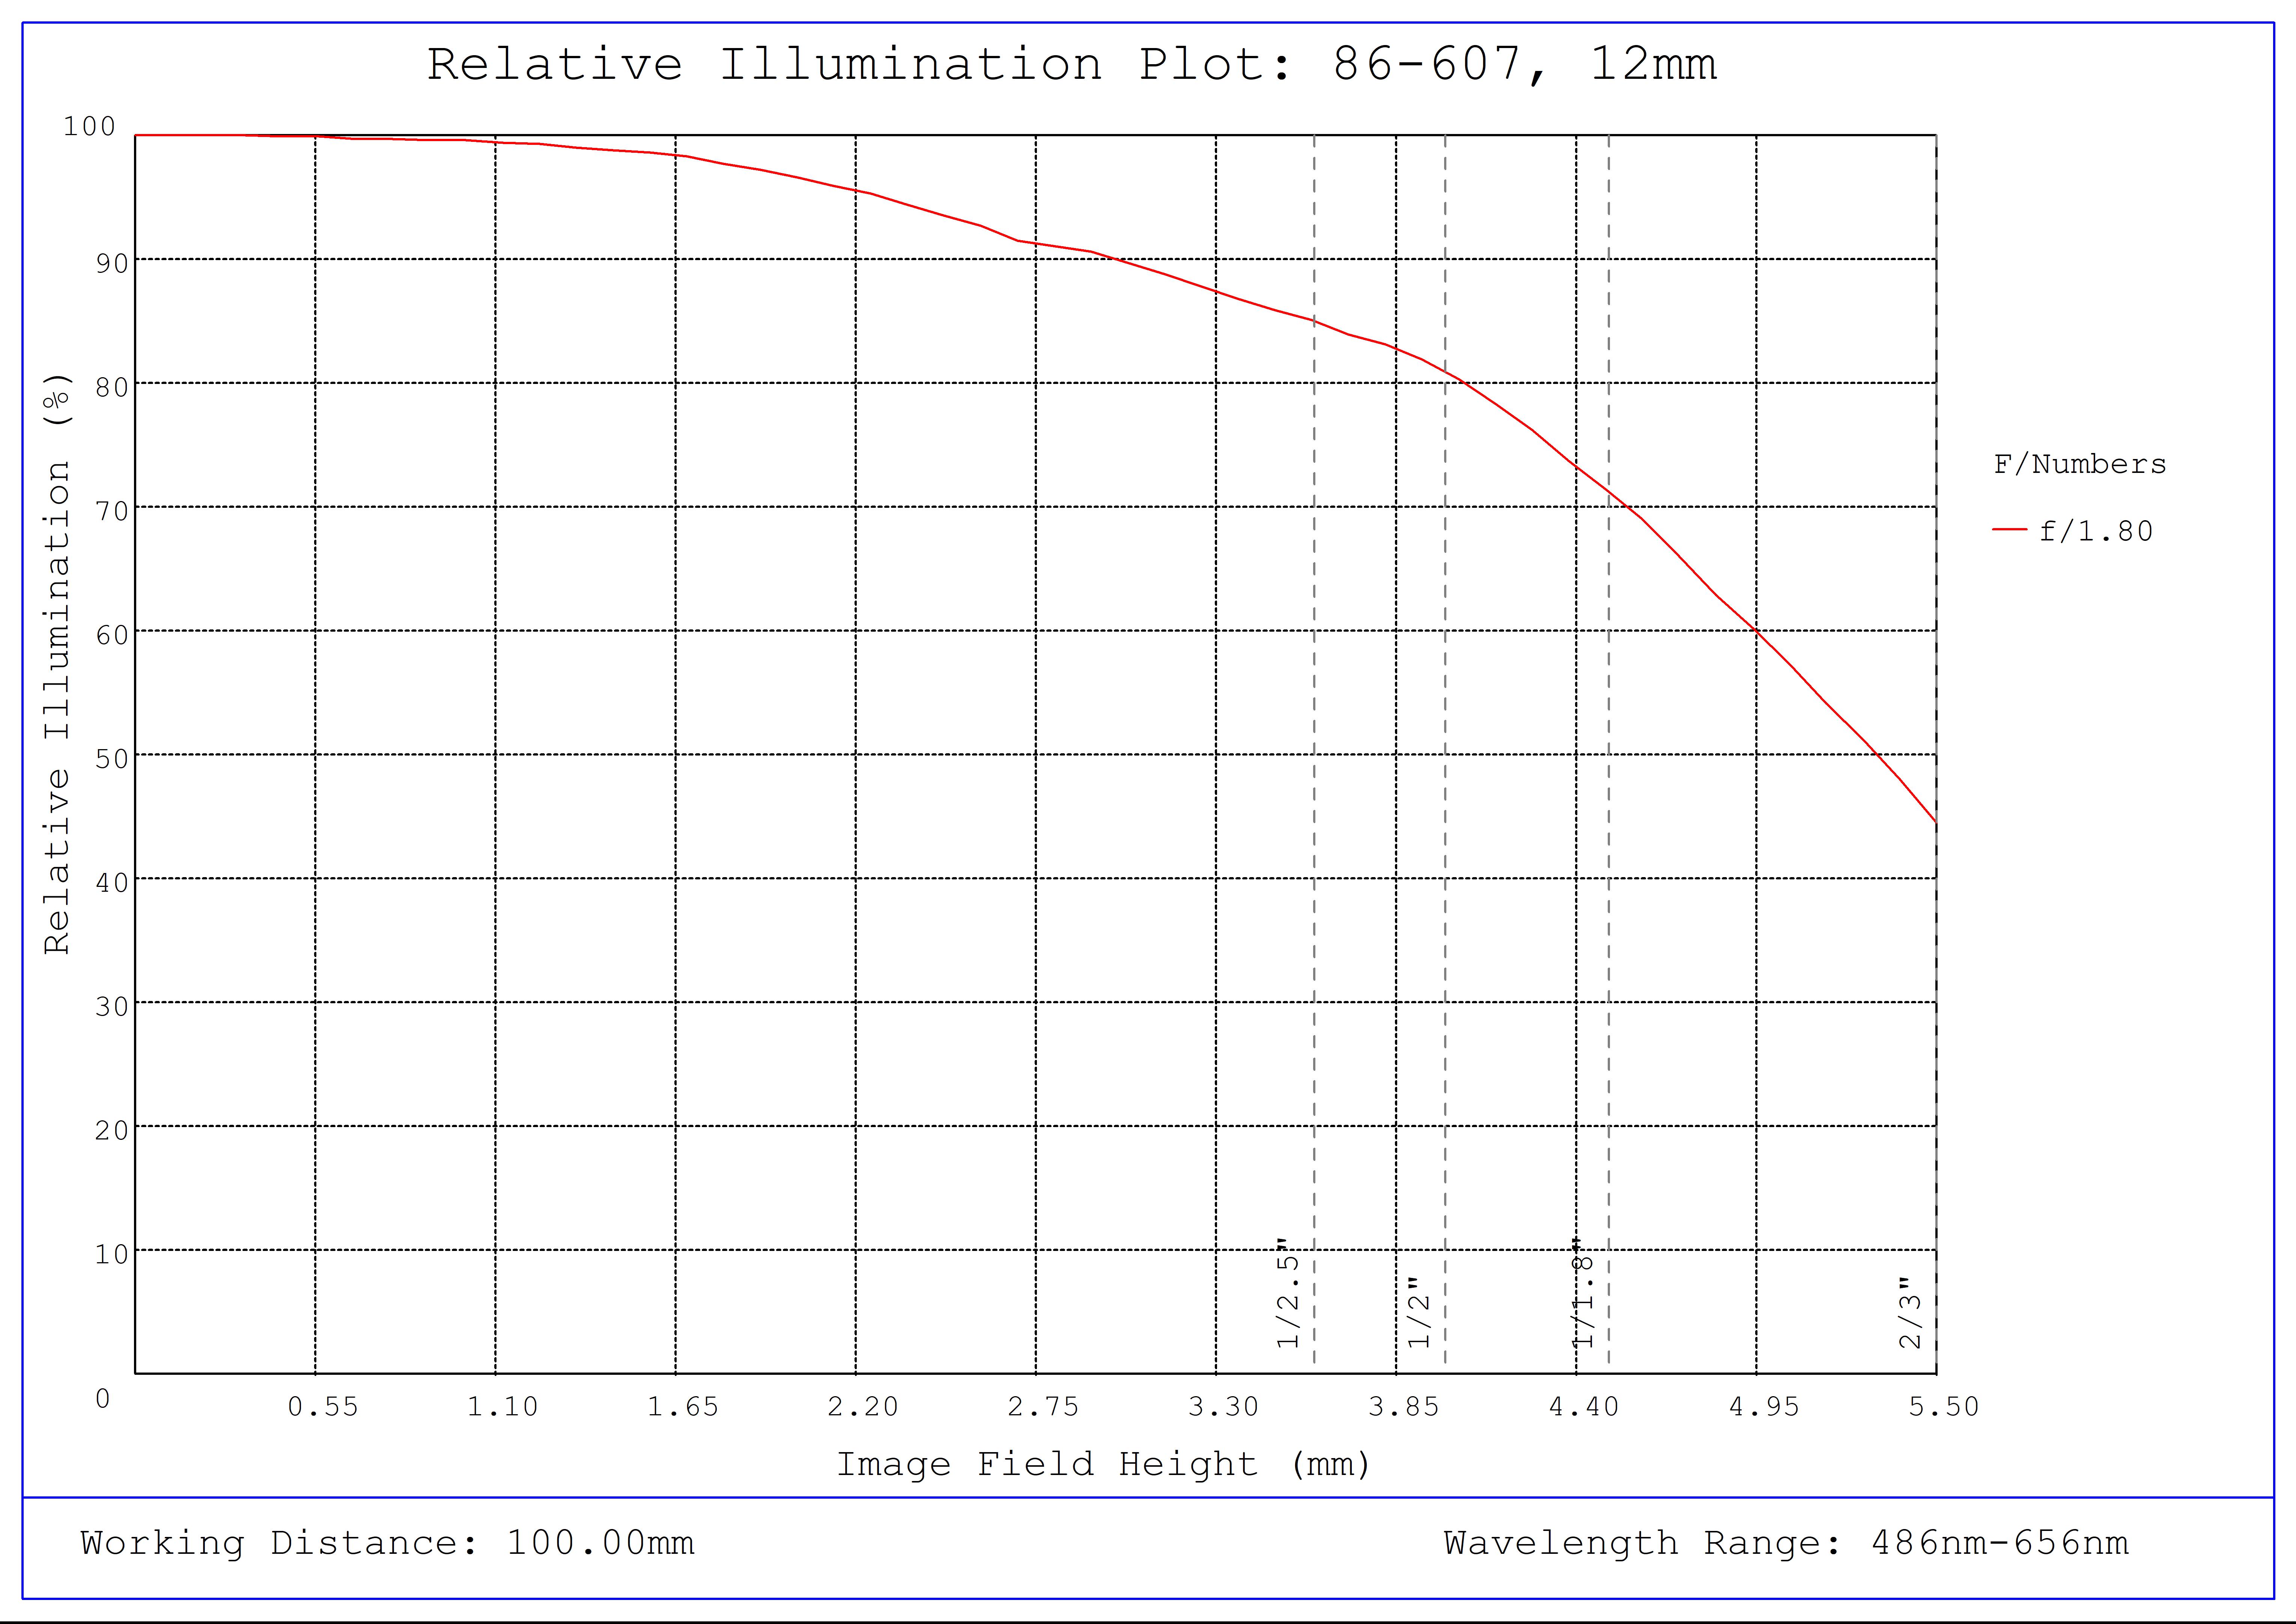 #86-607, 12mm, f/1.8 Ci Series Fixed Focal Length Lens, Relative Illumination Plot